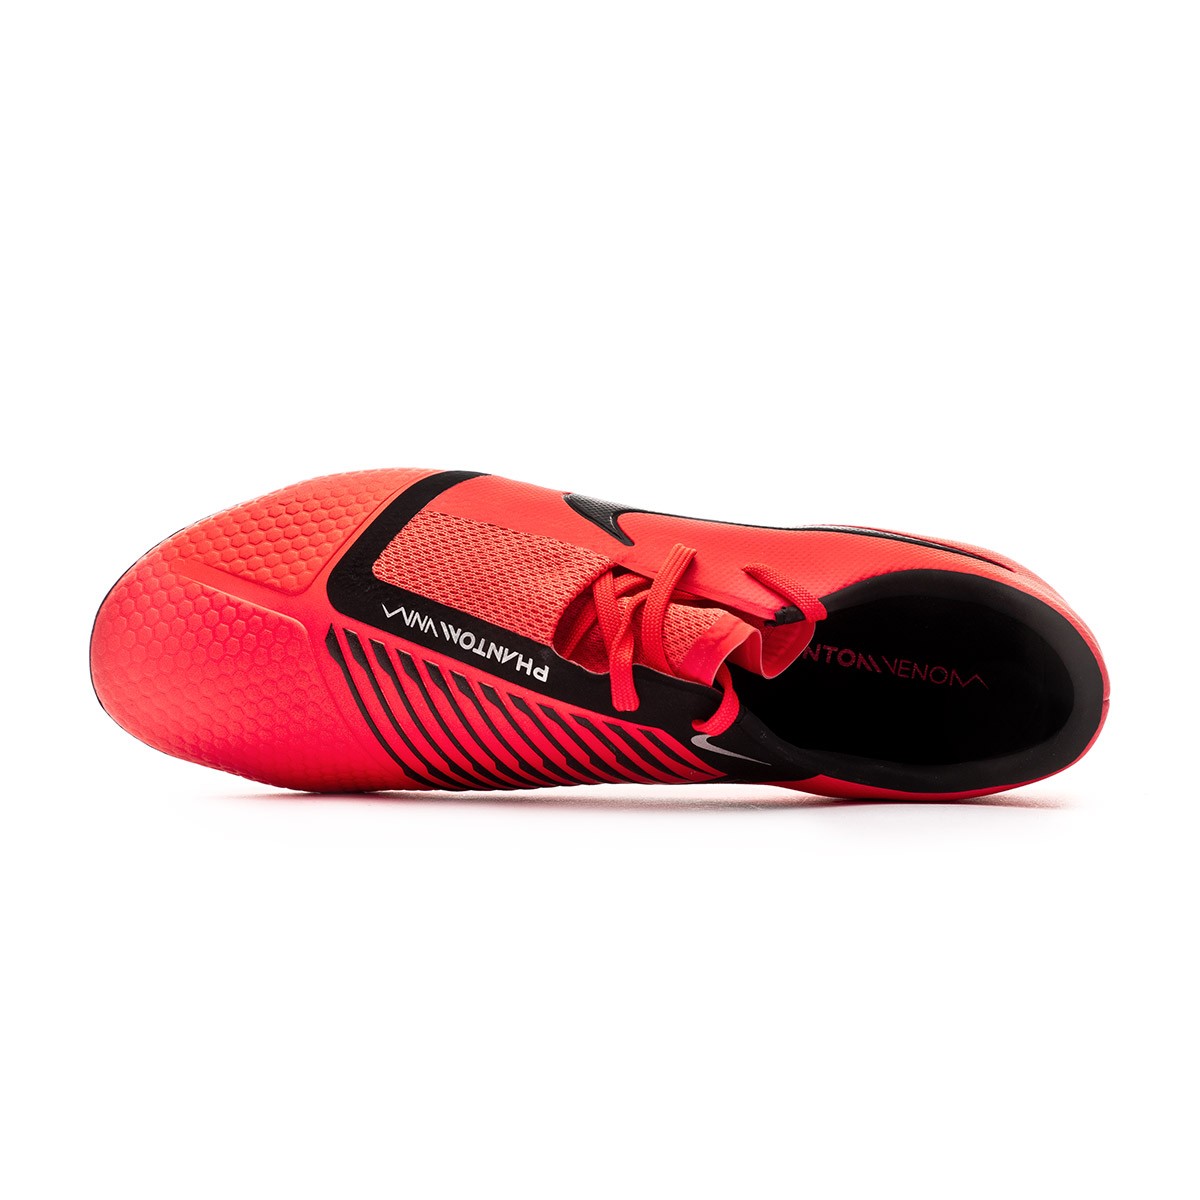 Nike Men's Hypervenom Phantom III Dynamic Fit Soccer Cleats